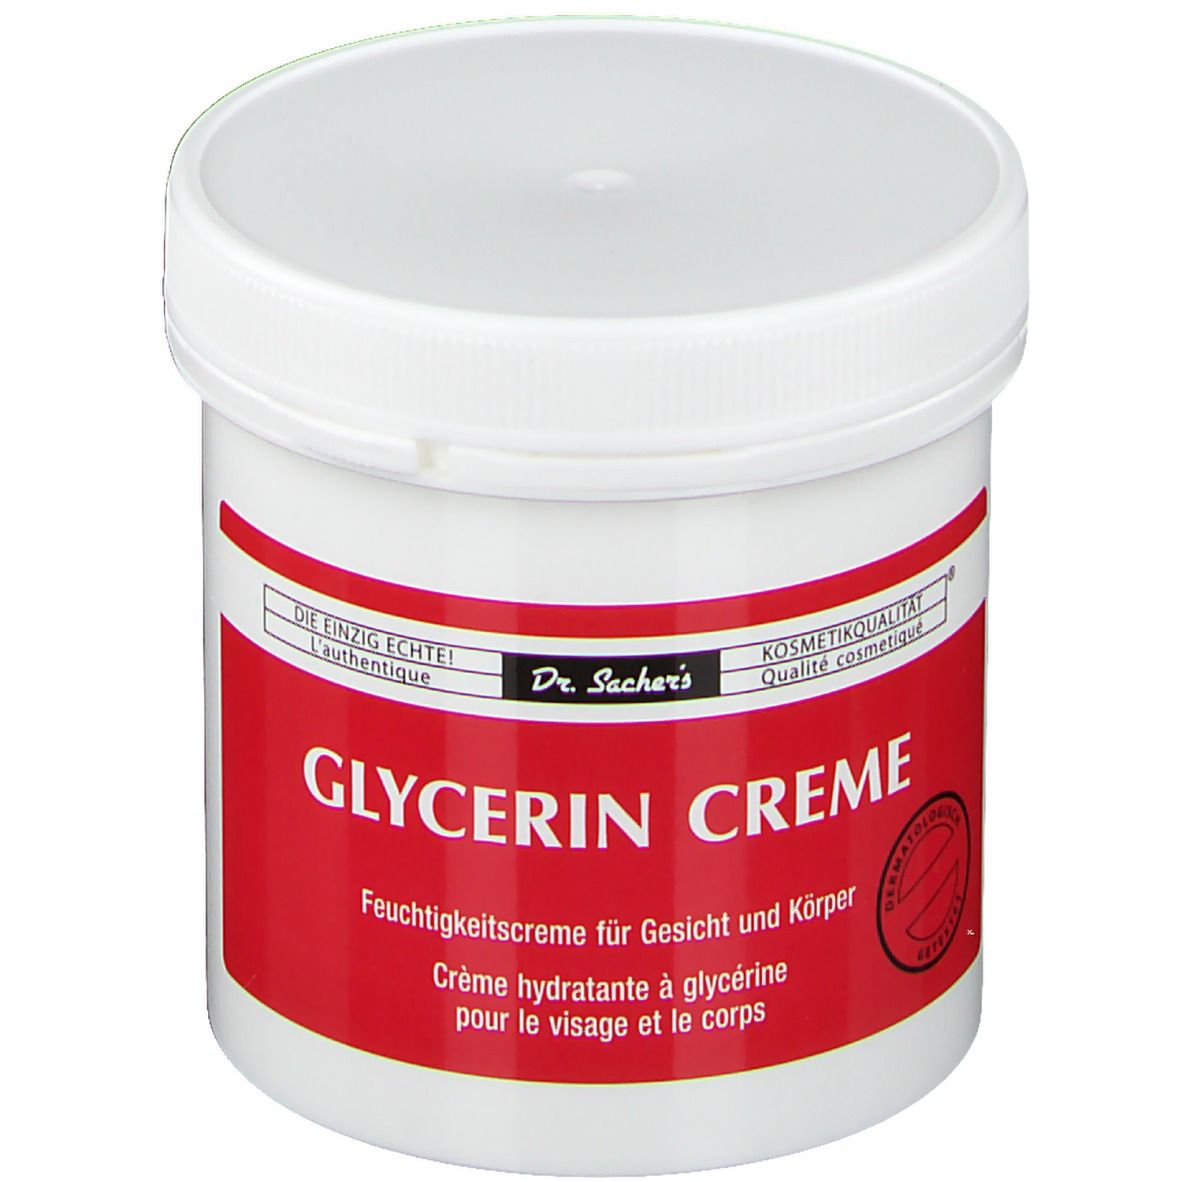 Glycerin Creme